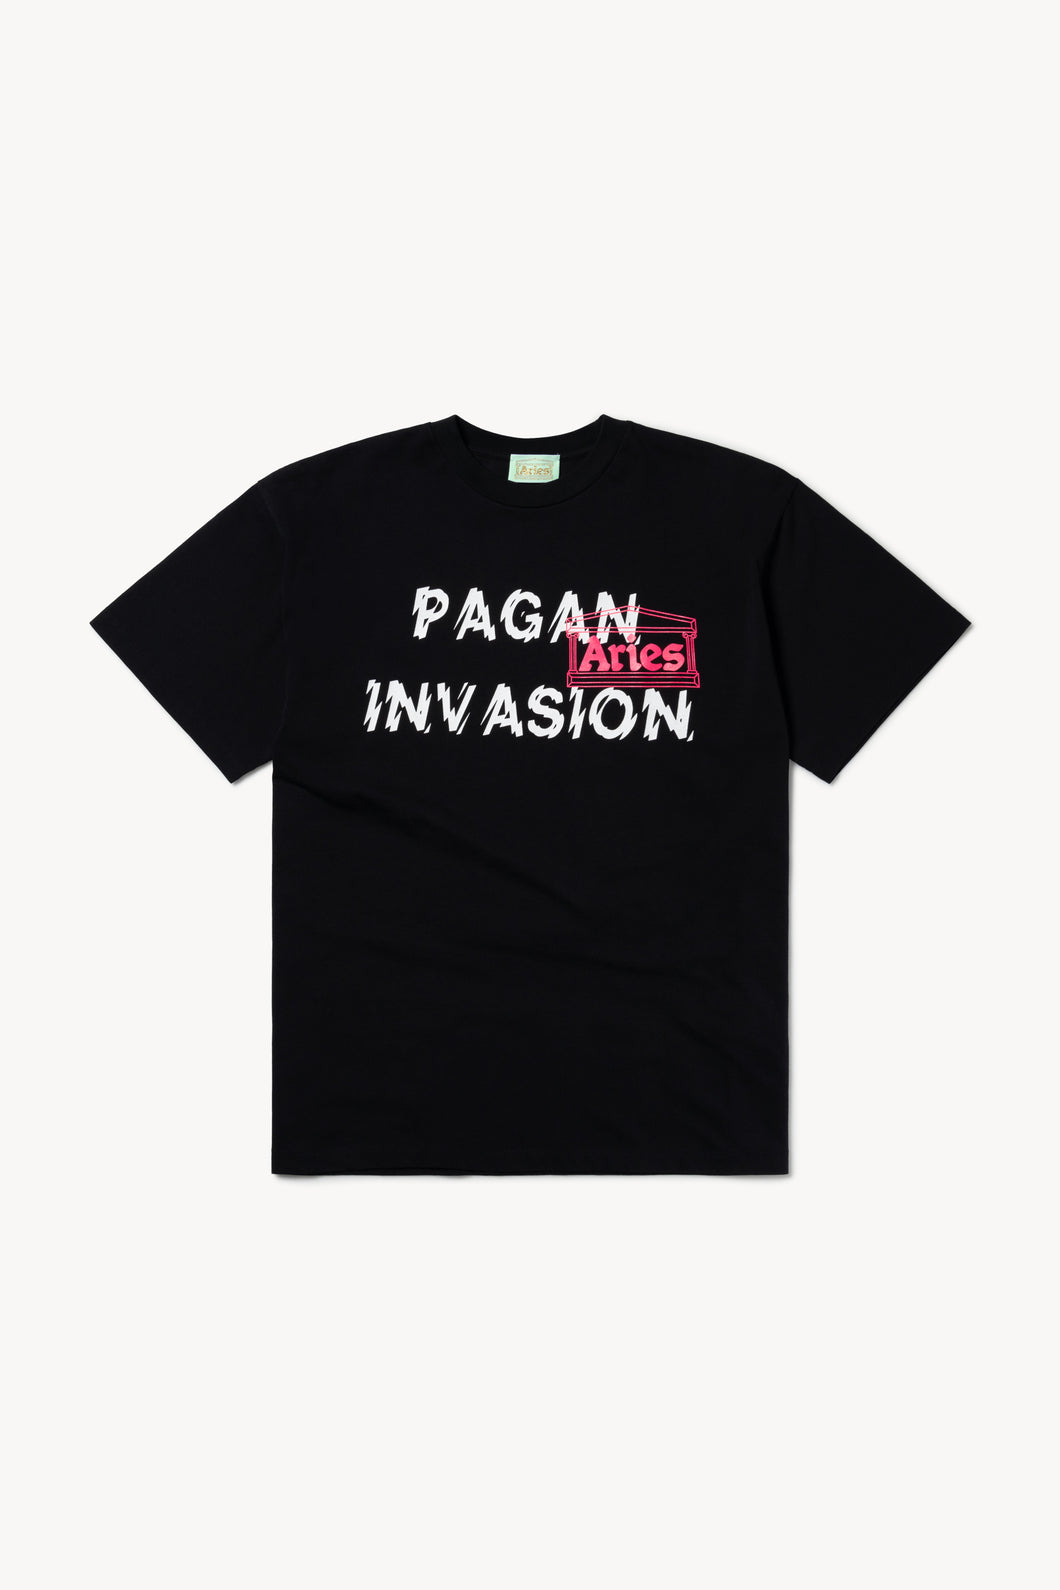 Pagan Invasion Tee